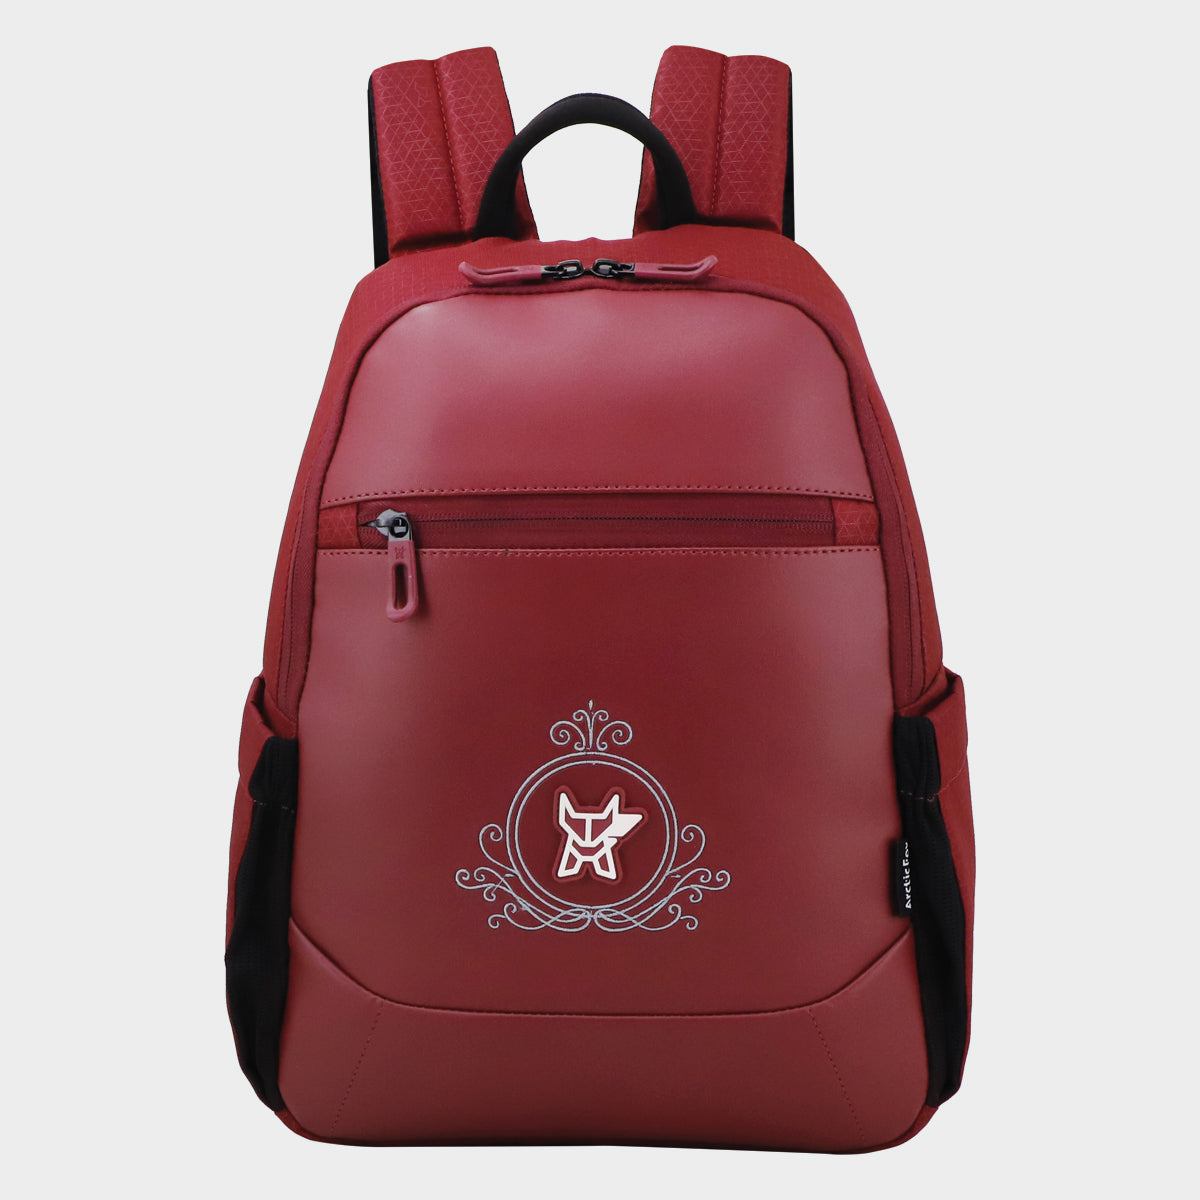 Gianni Chiarini Luna Red Leather Backpack - Niutrack.com